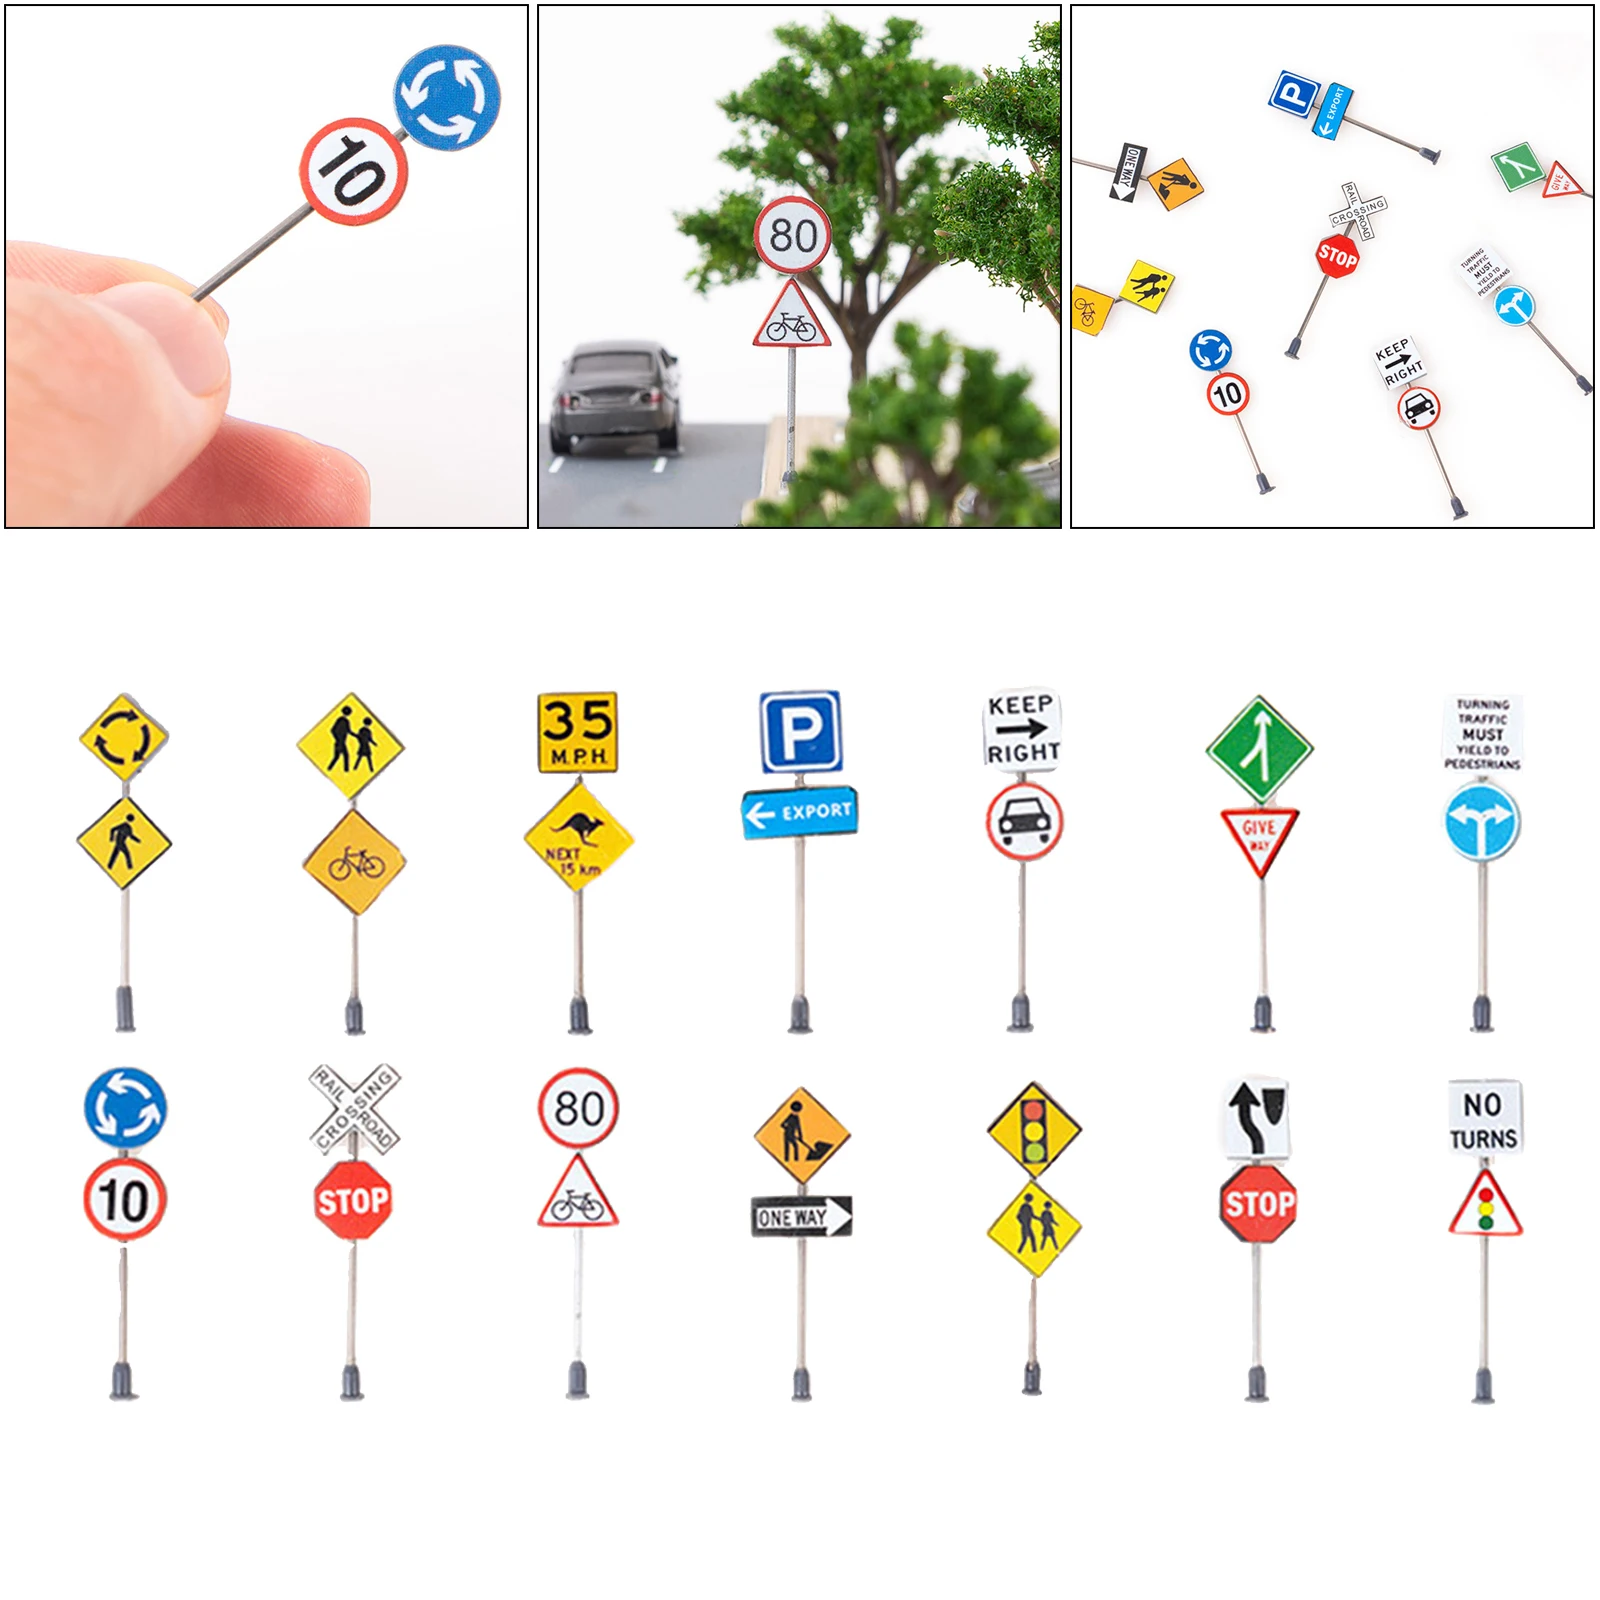 14cs/set Mini Traffic Signs DIY Micro Landscape Decor Layout Road Sign Architectural Model Decor Accs for 1:87 1:150/1:100 Scale